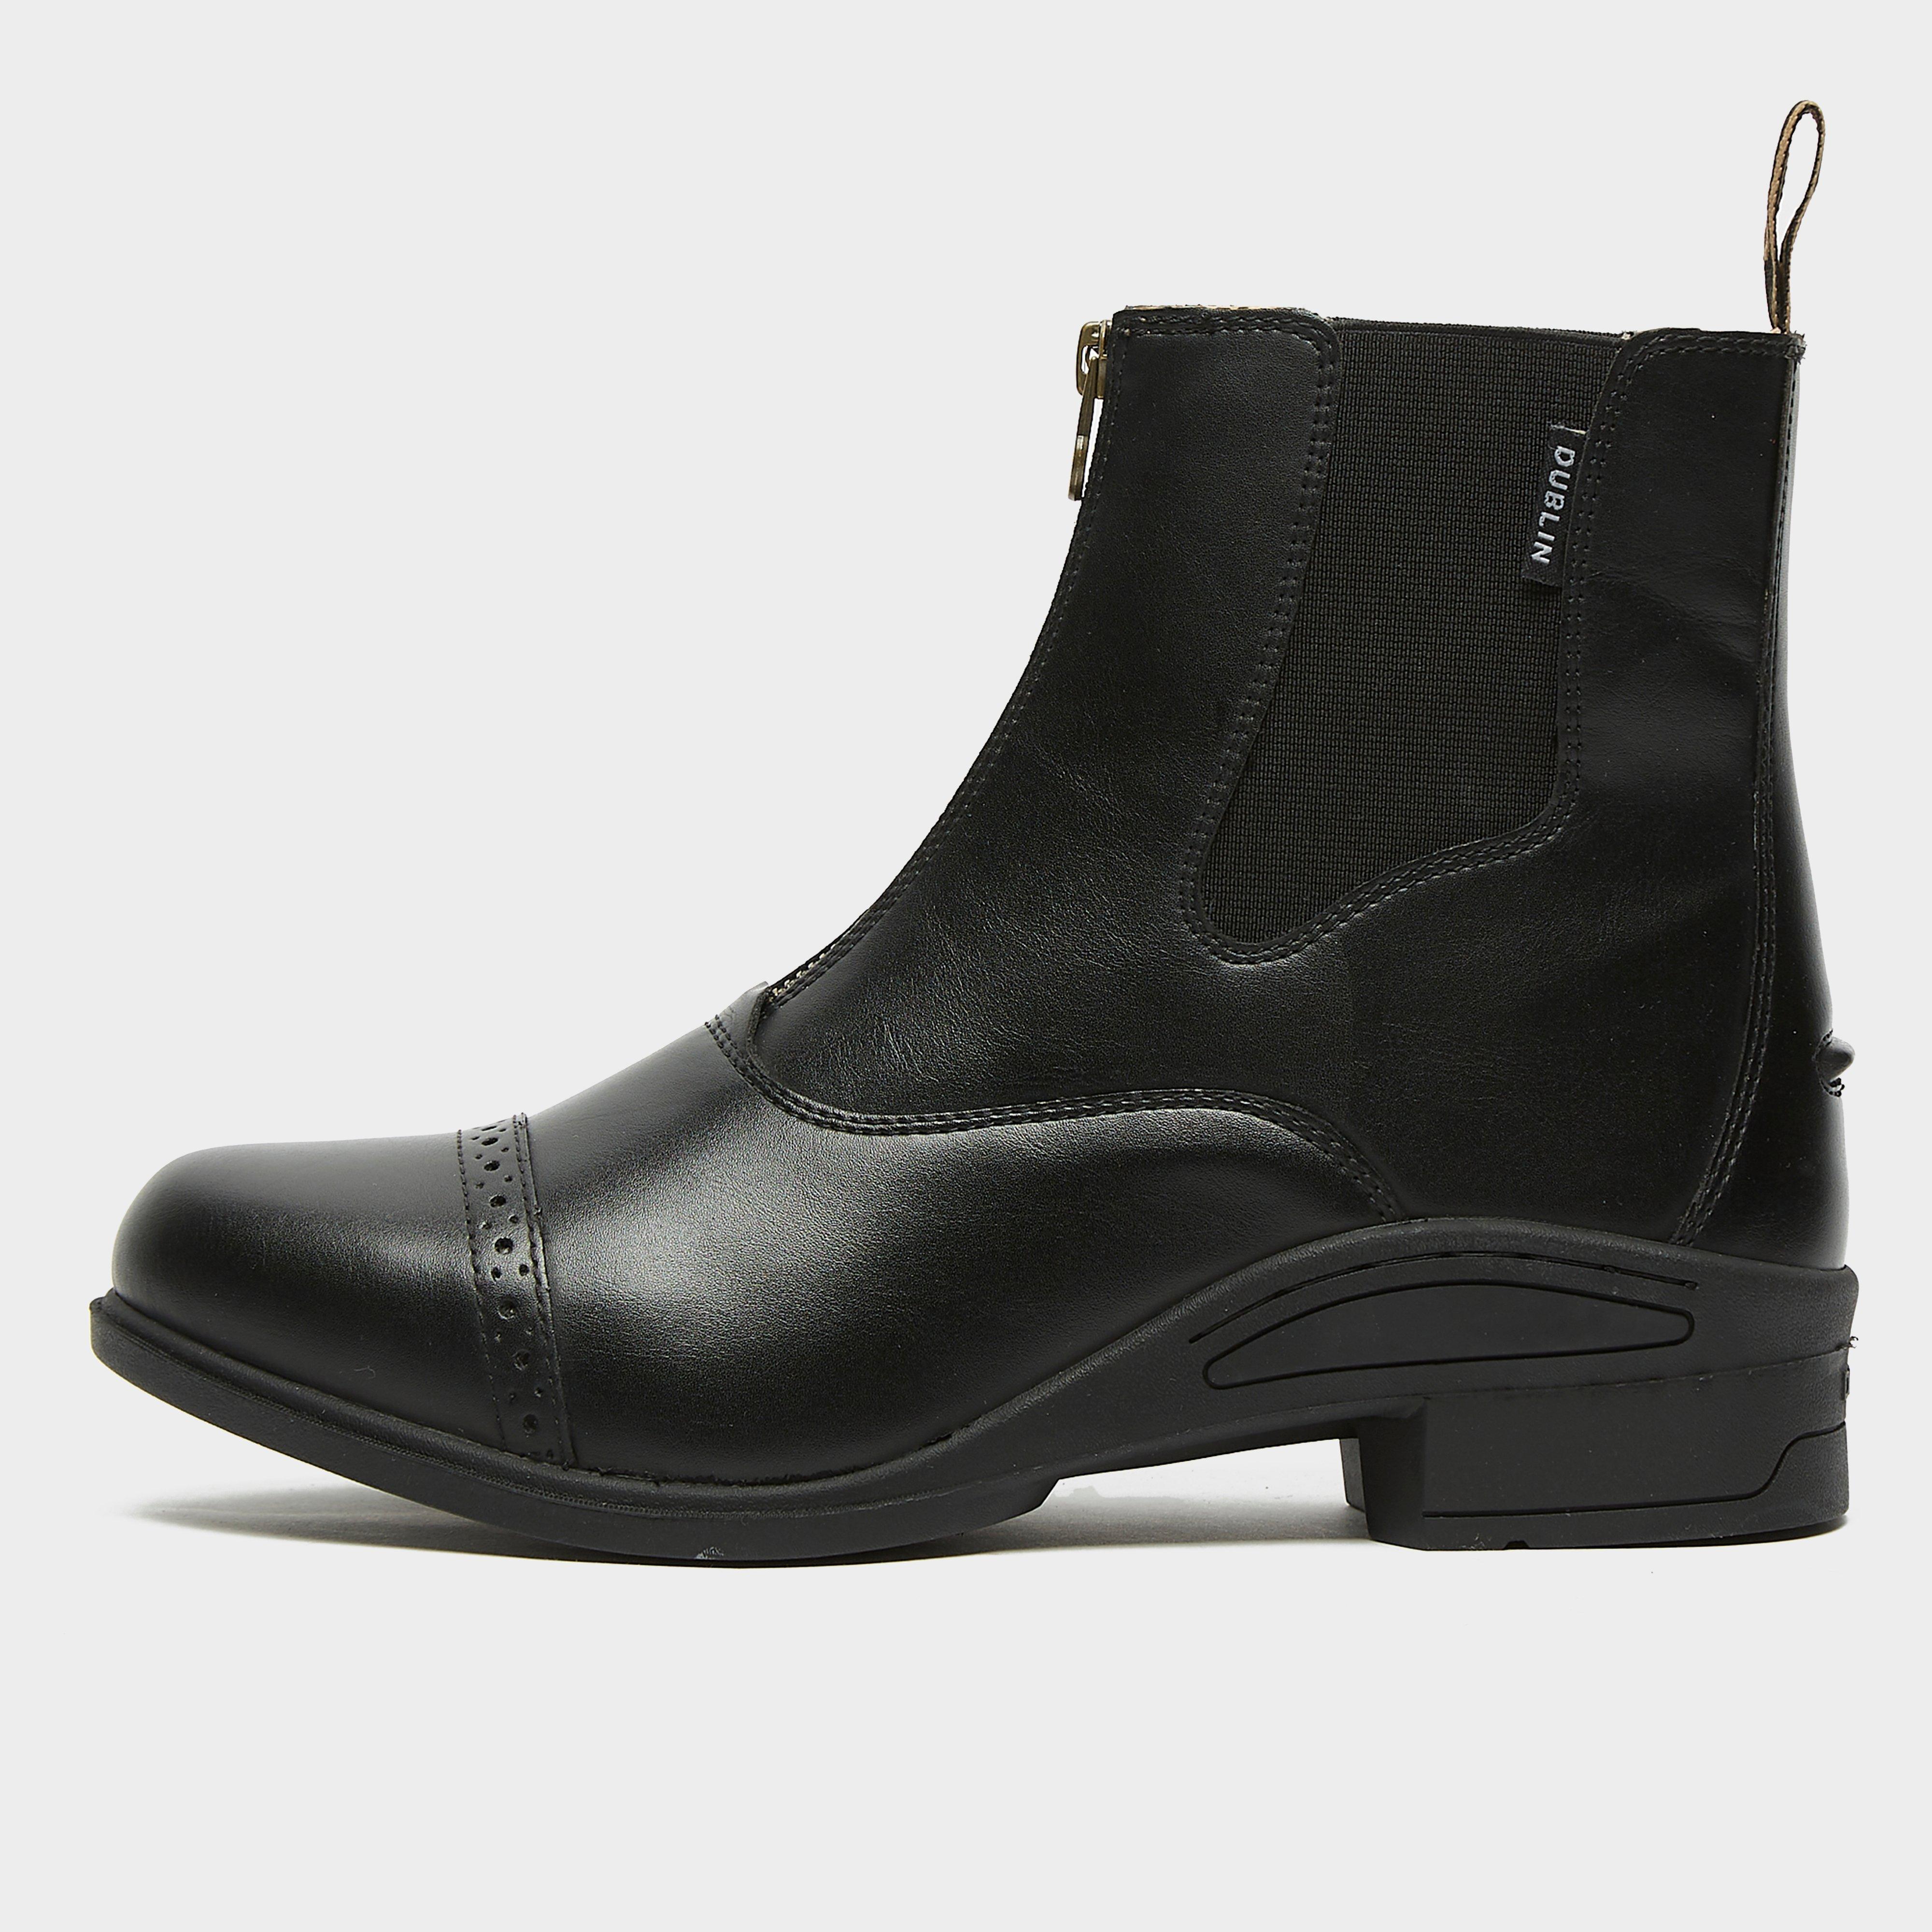 Dublin Dublin Womens Altitude Zip Paddock Boots - Black, Black